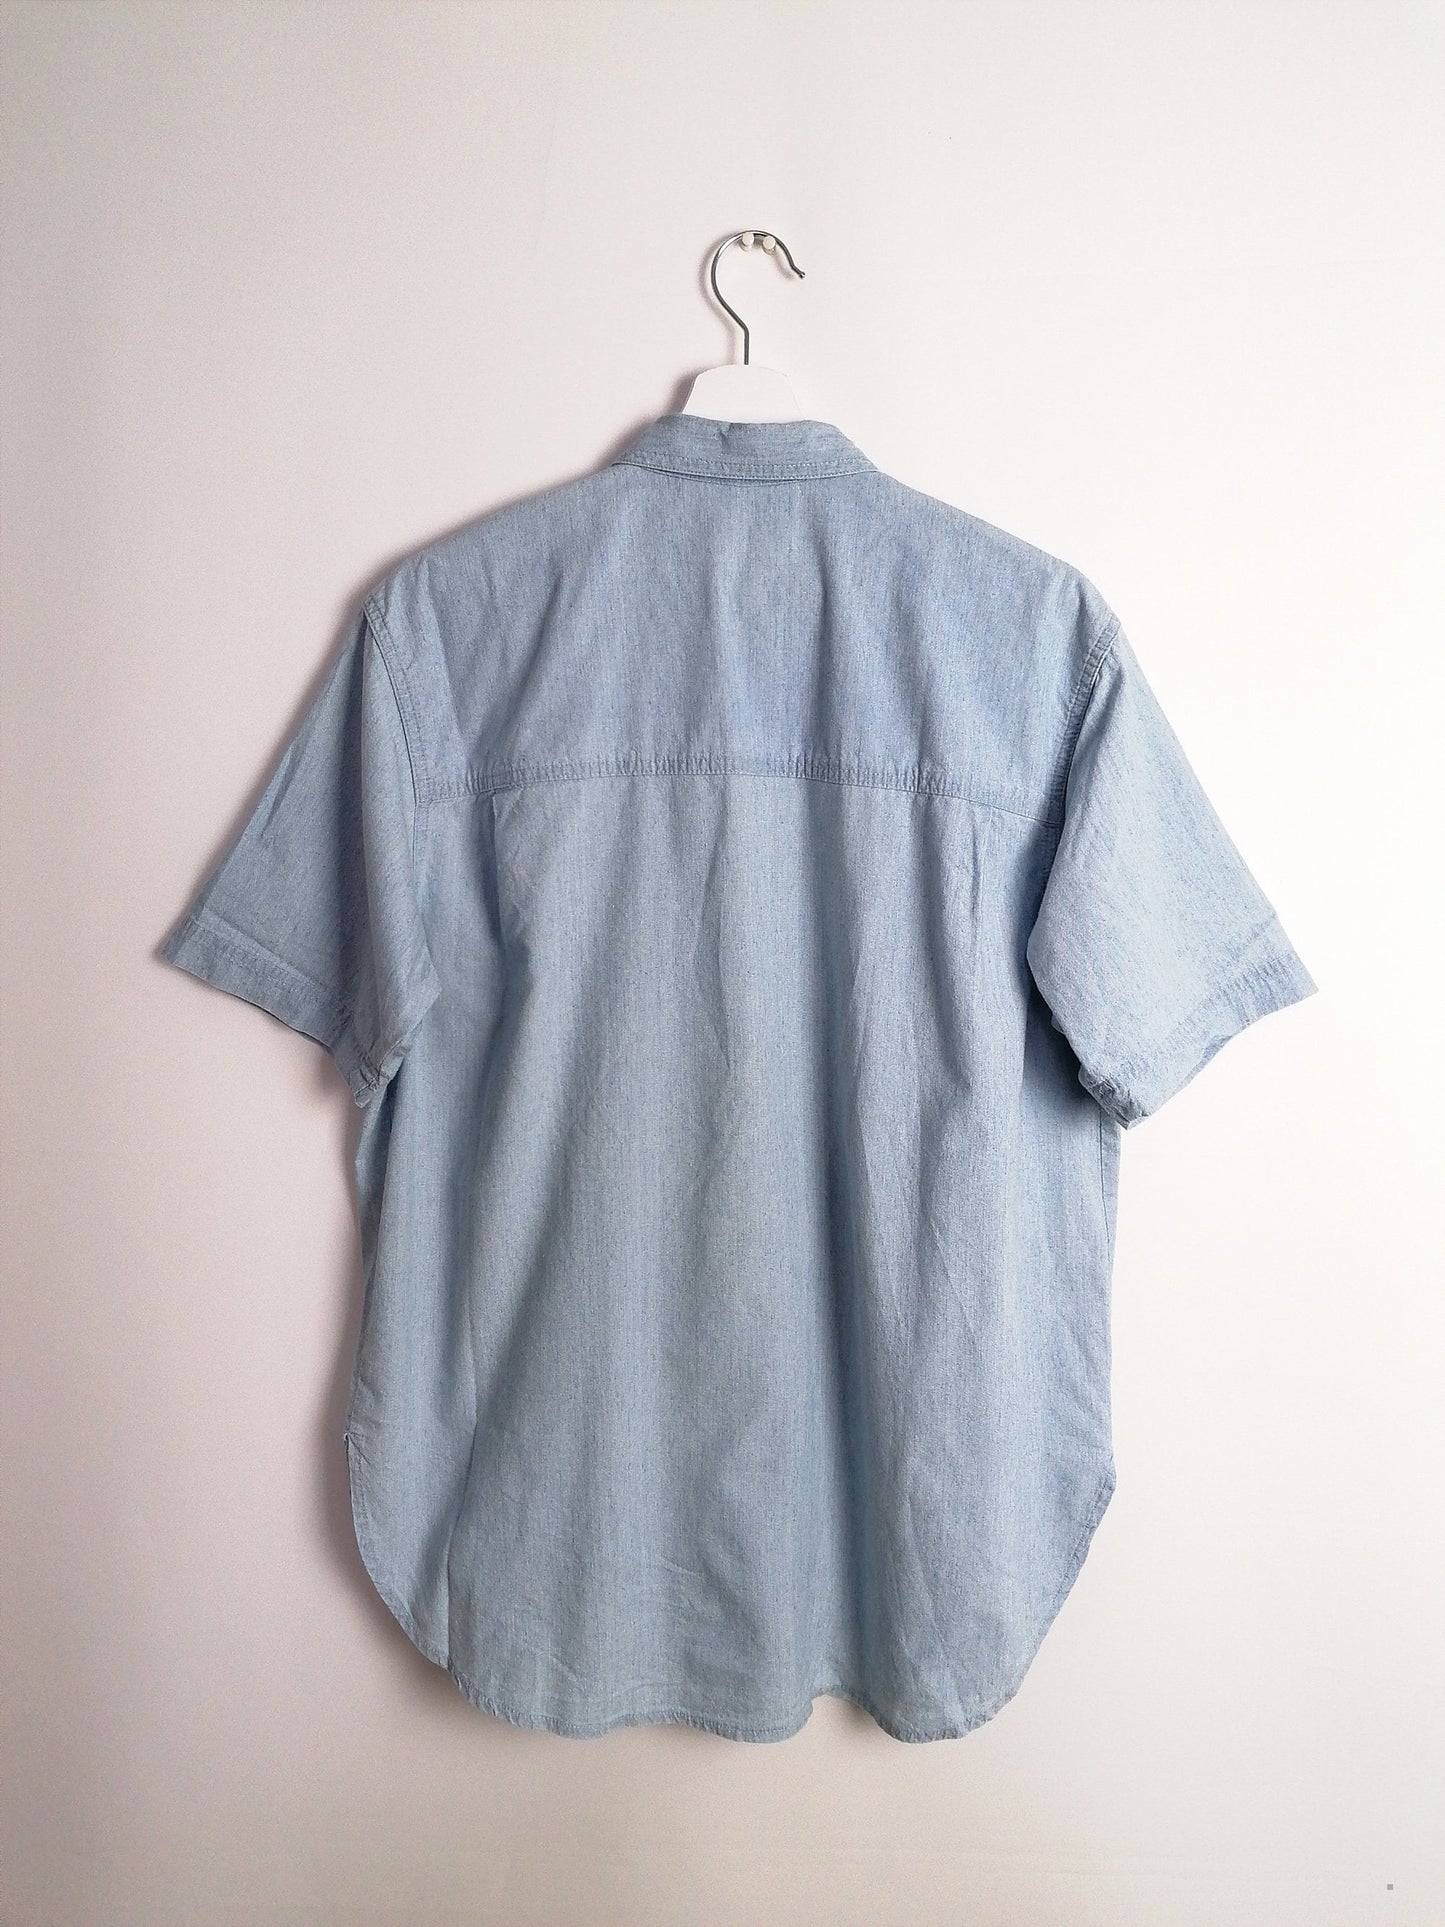 Vintage 90's Lightweight Oversized Denim Shirt - size S-M